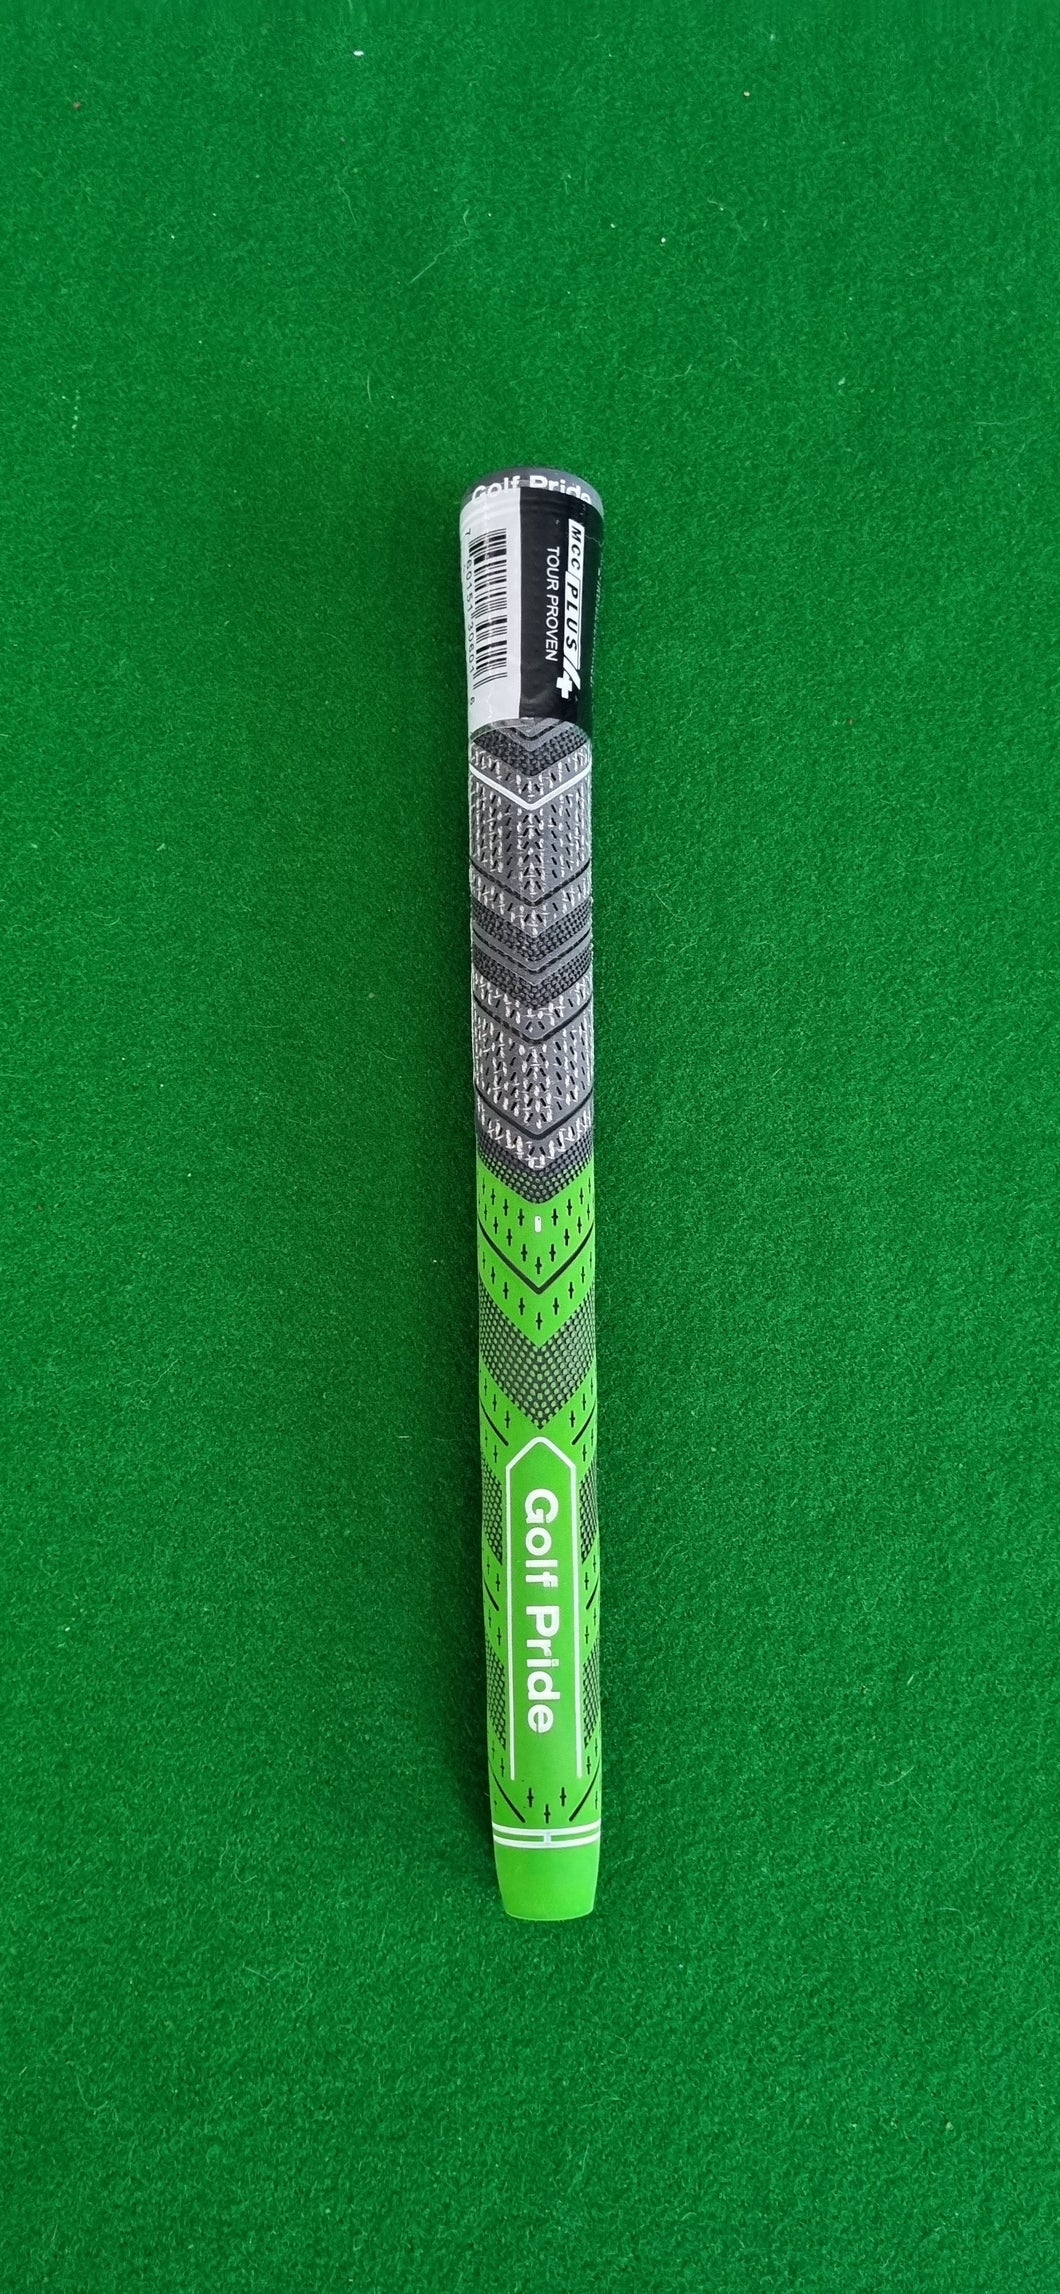 New Golf Pride MCC Plus 4 Golf Grip - Green - Midsize  - New